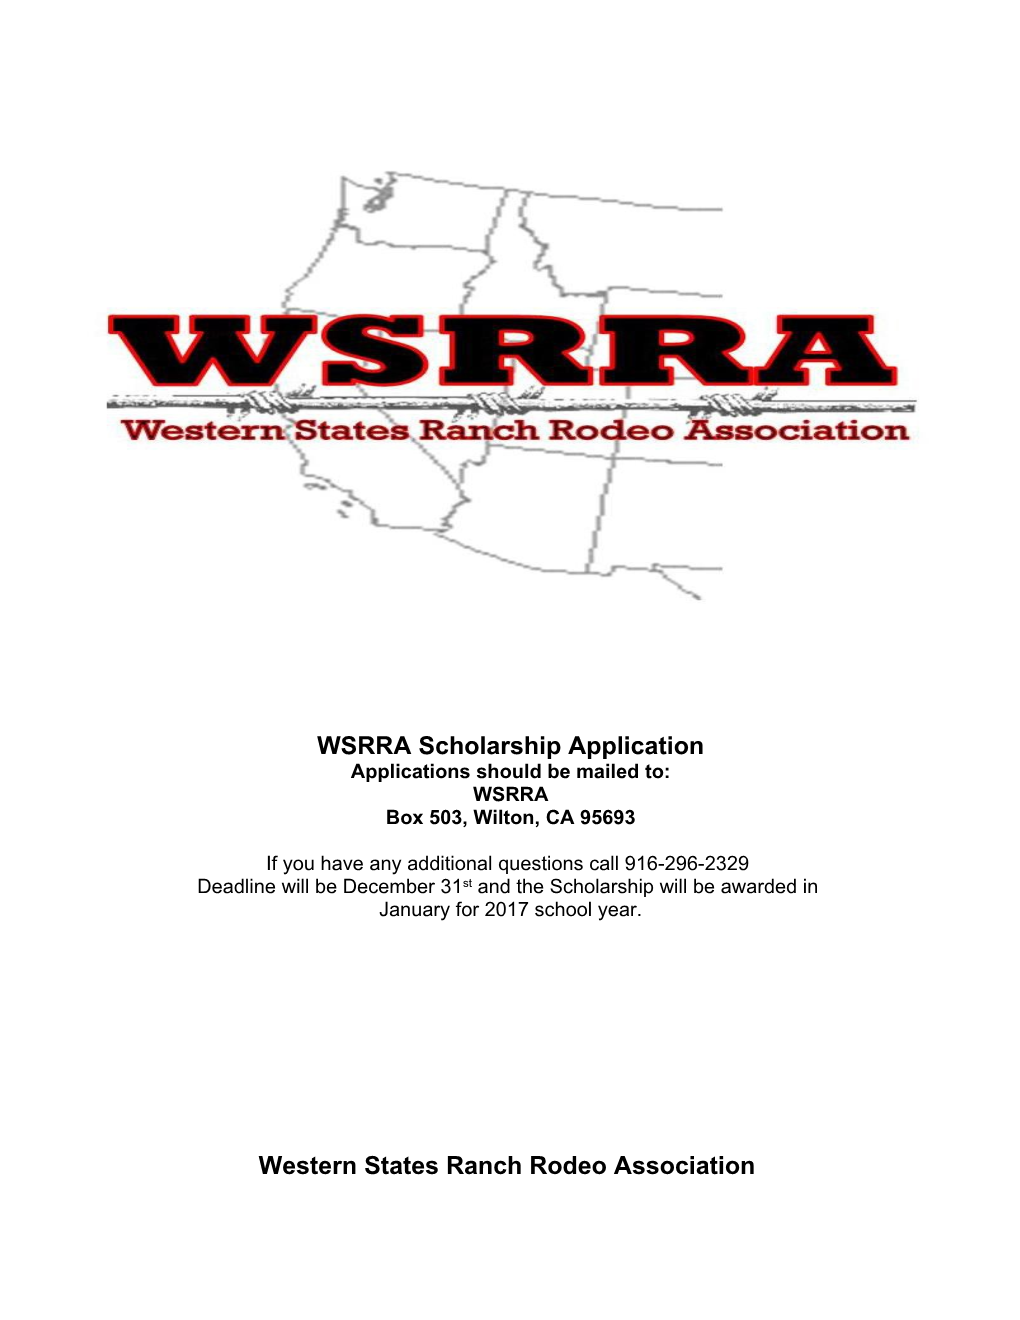 WSRRA Scholarship Application